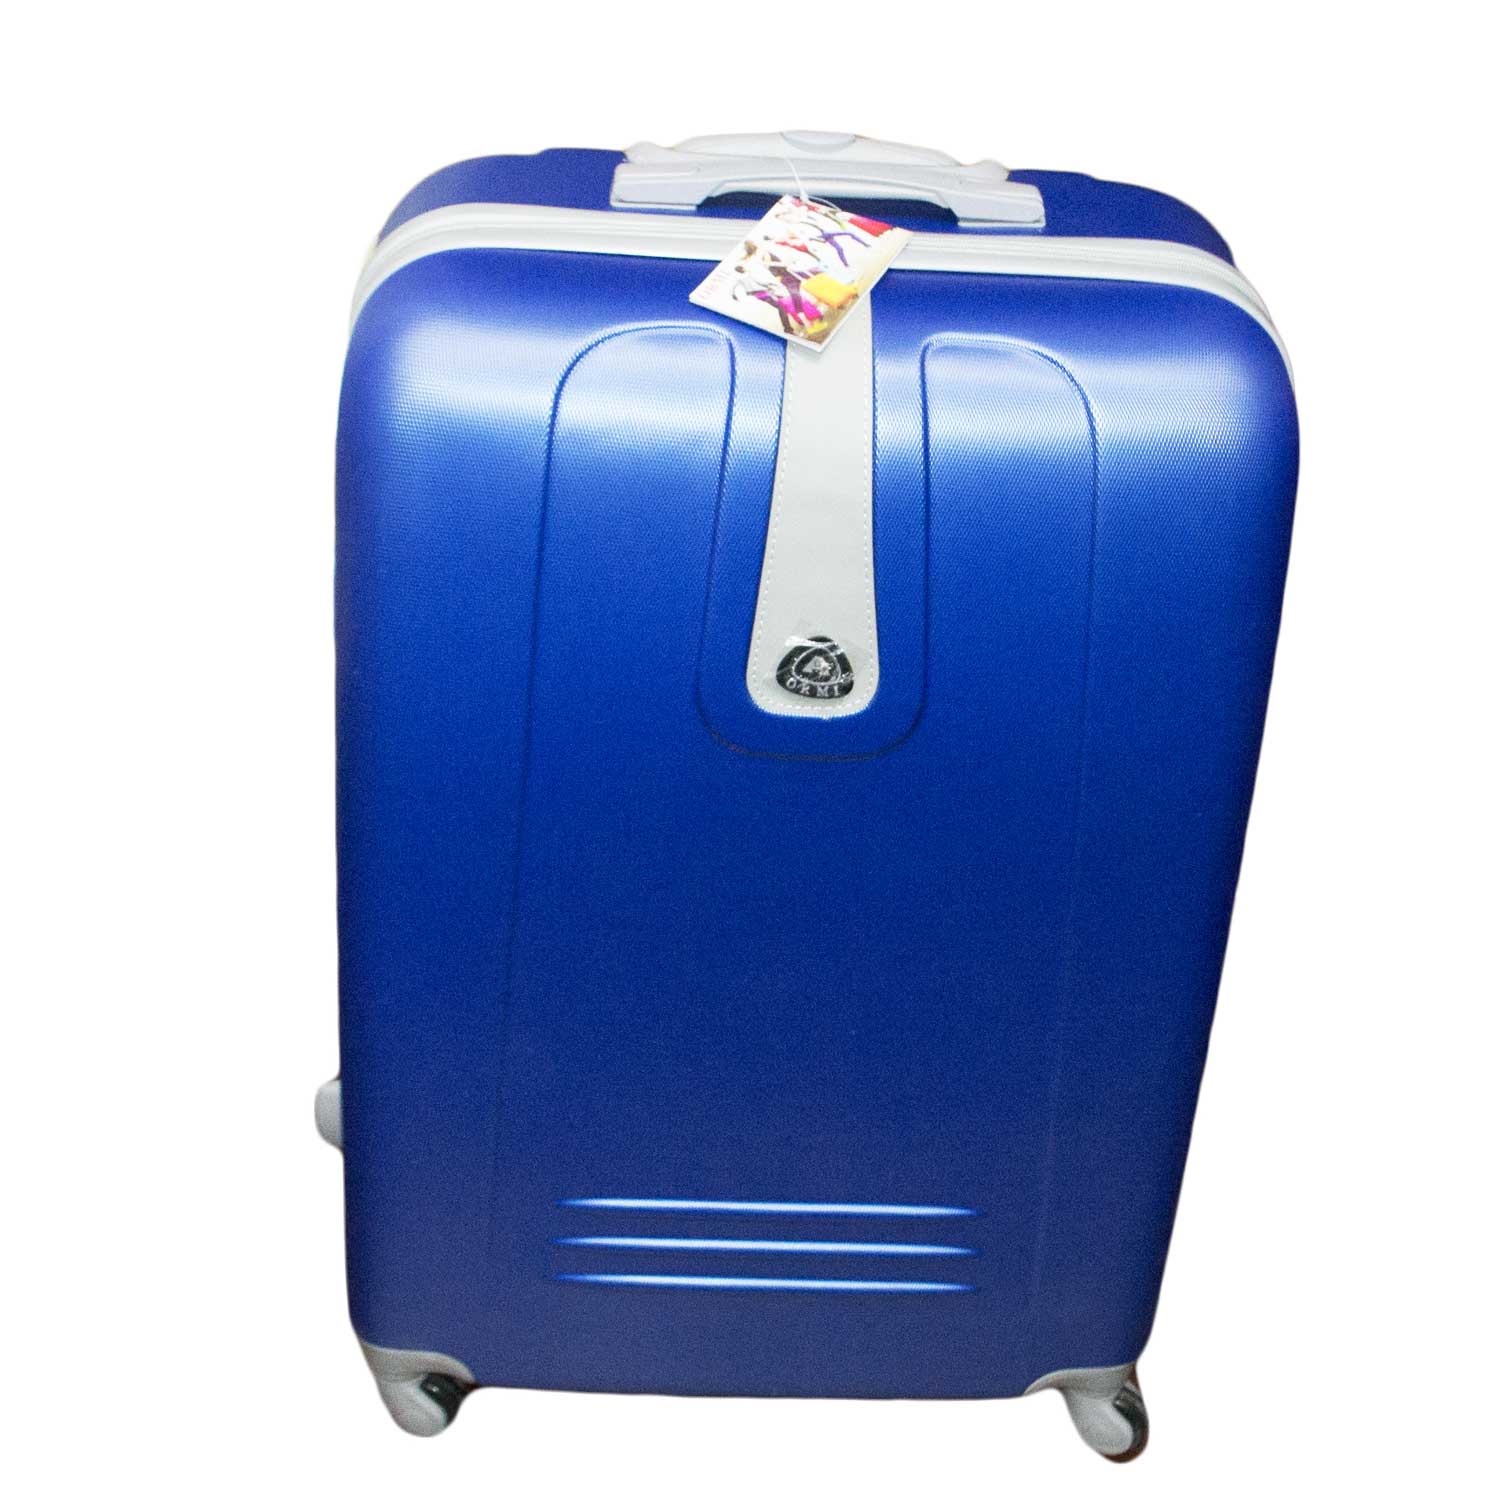 Set di 3 valigie Blu Cobalto con struttura rigida trolley valigie bagaglio a mano.